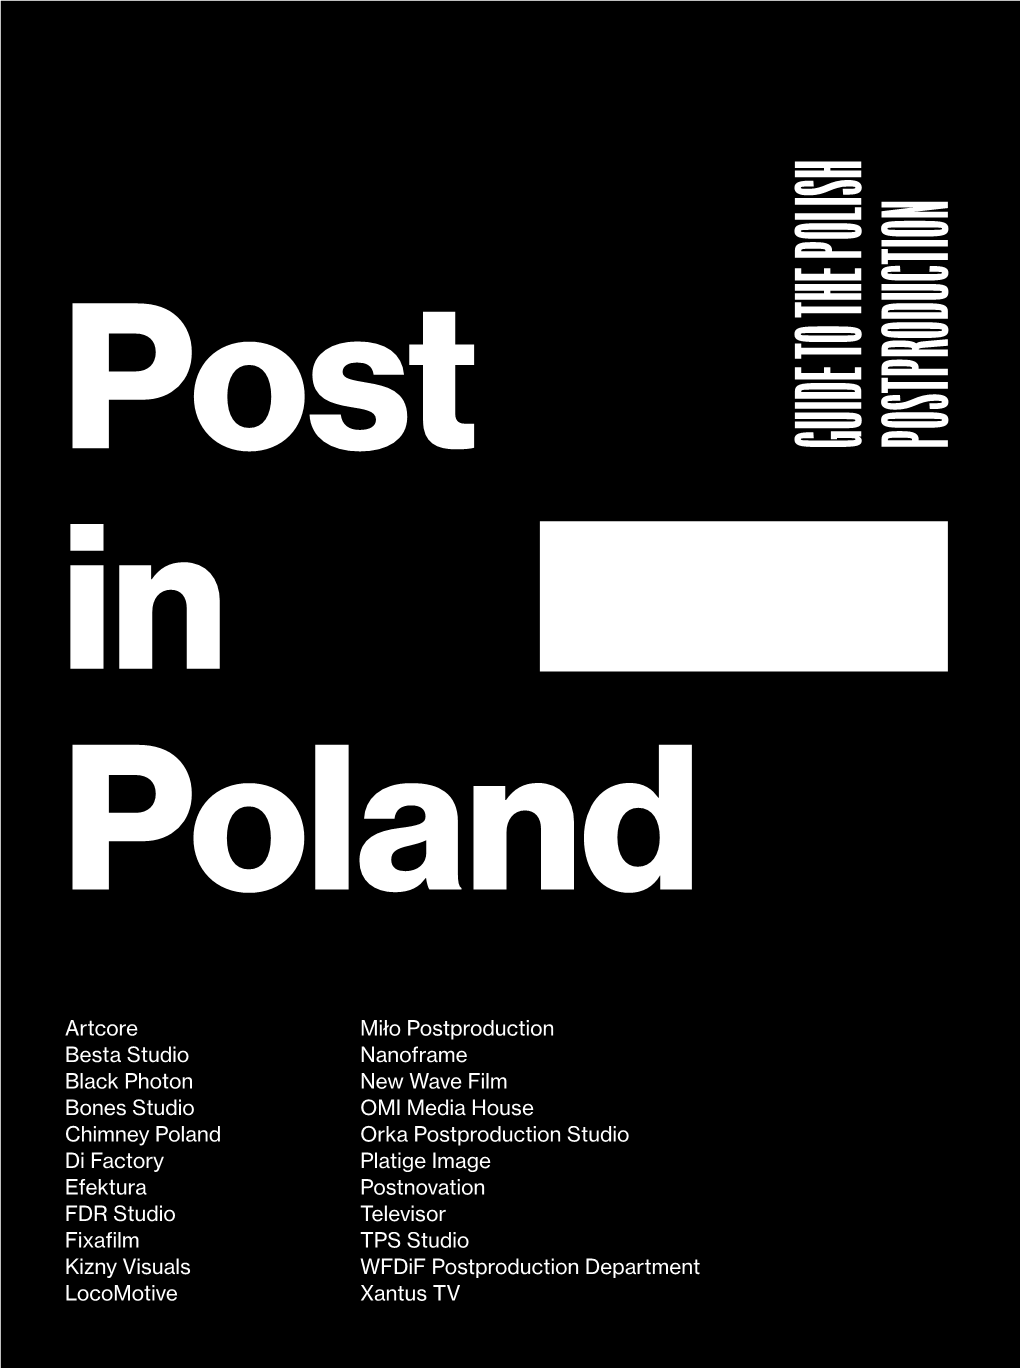 Guide to the Polish Postproduction